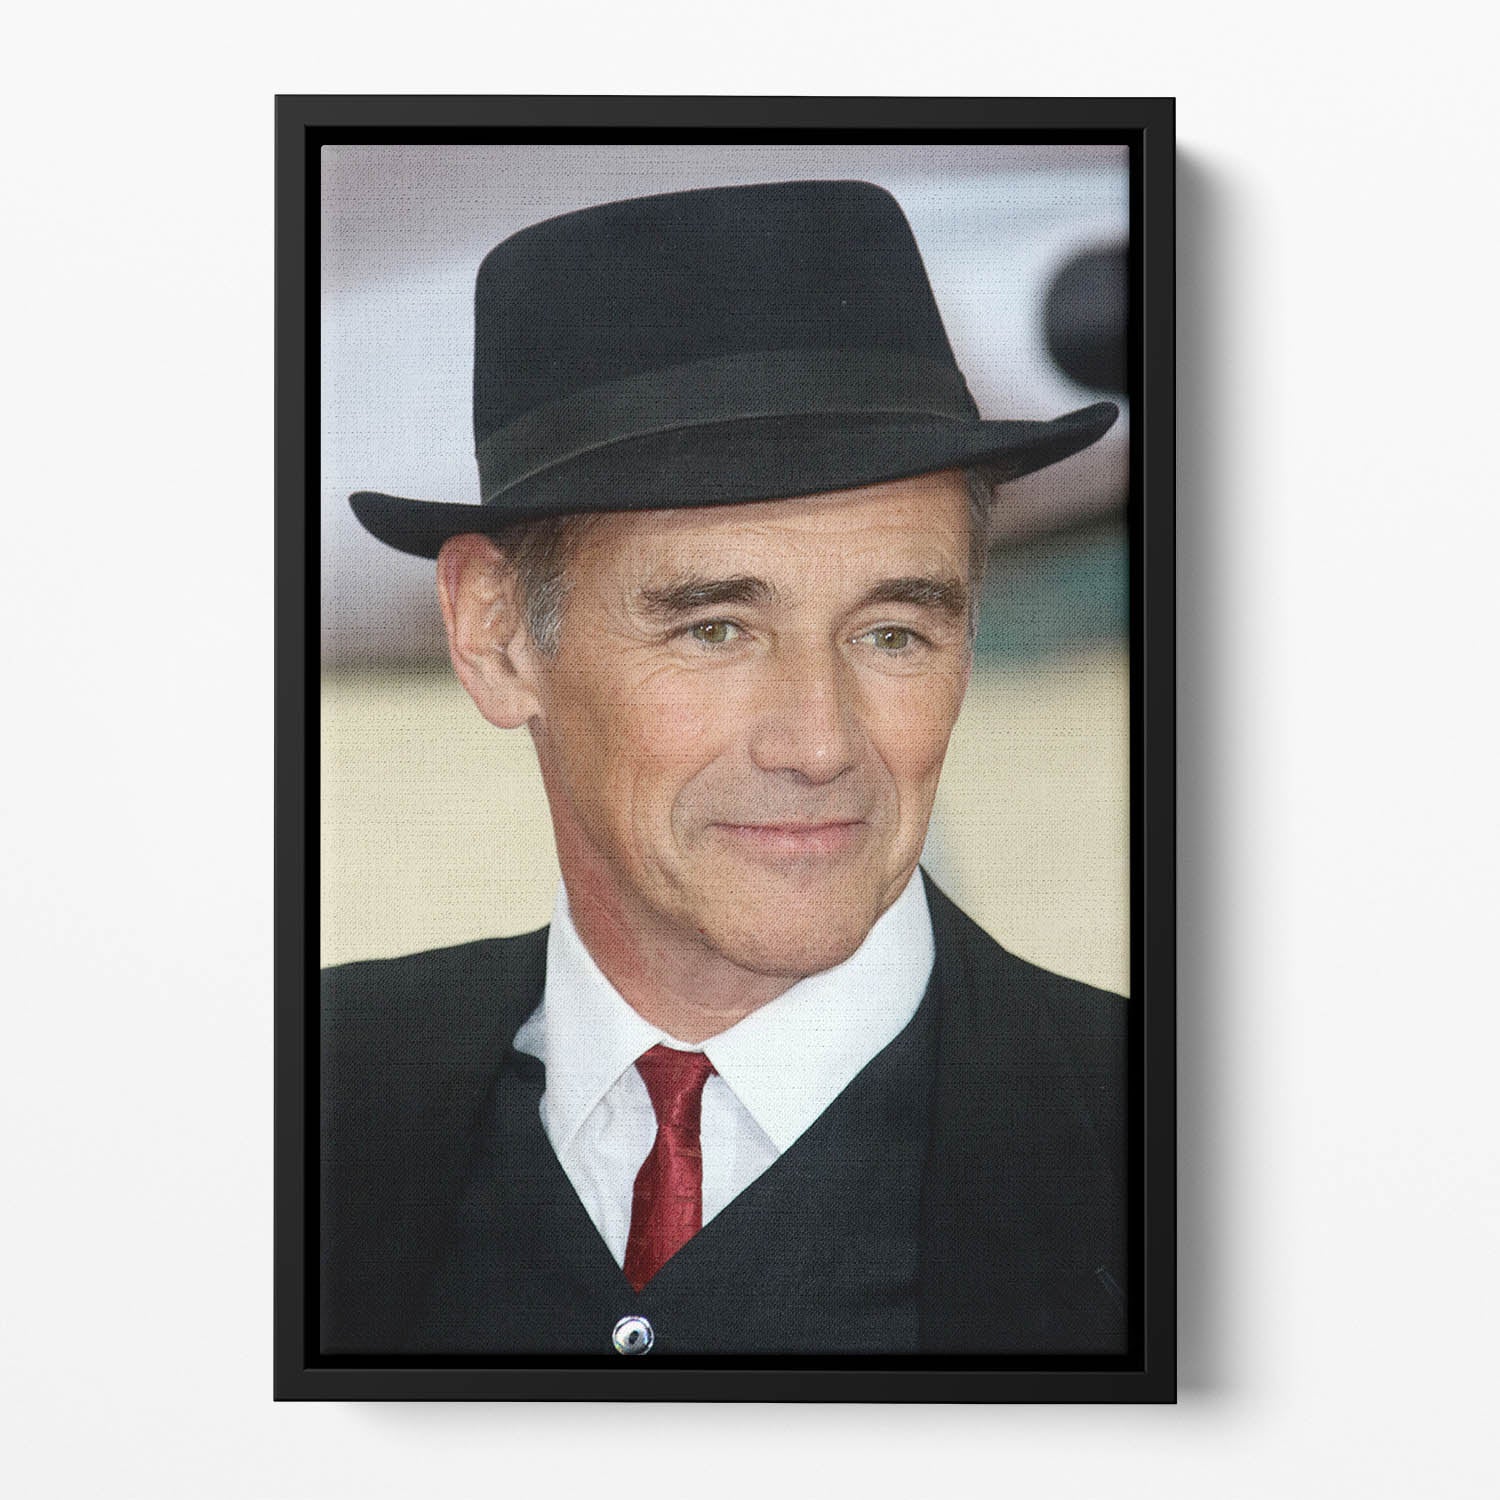 Mark Rylance in a hat Floating Framed Canvas